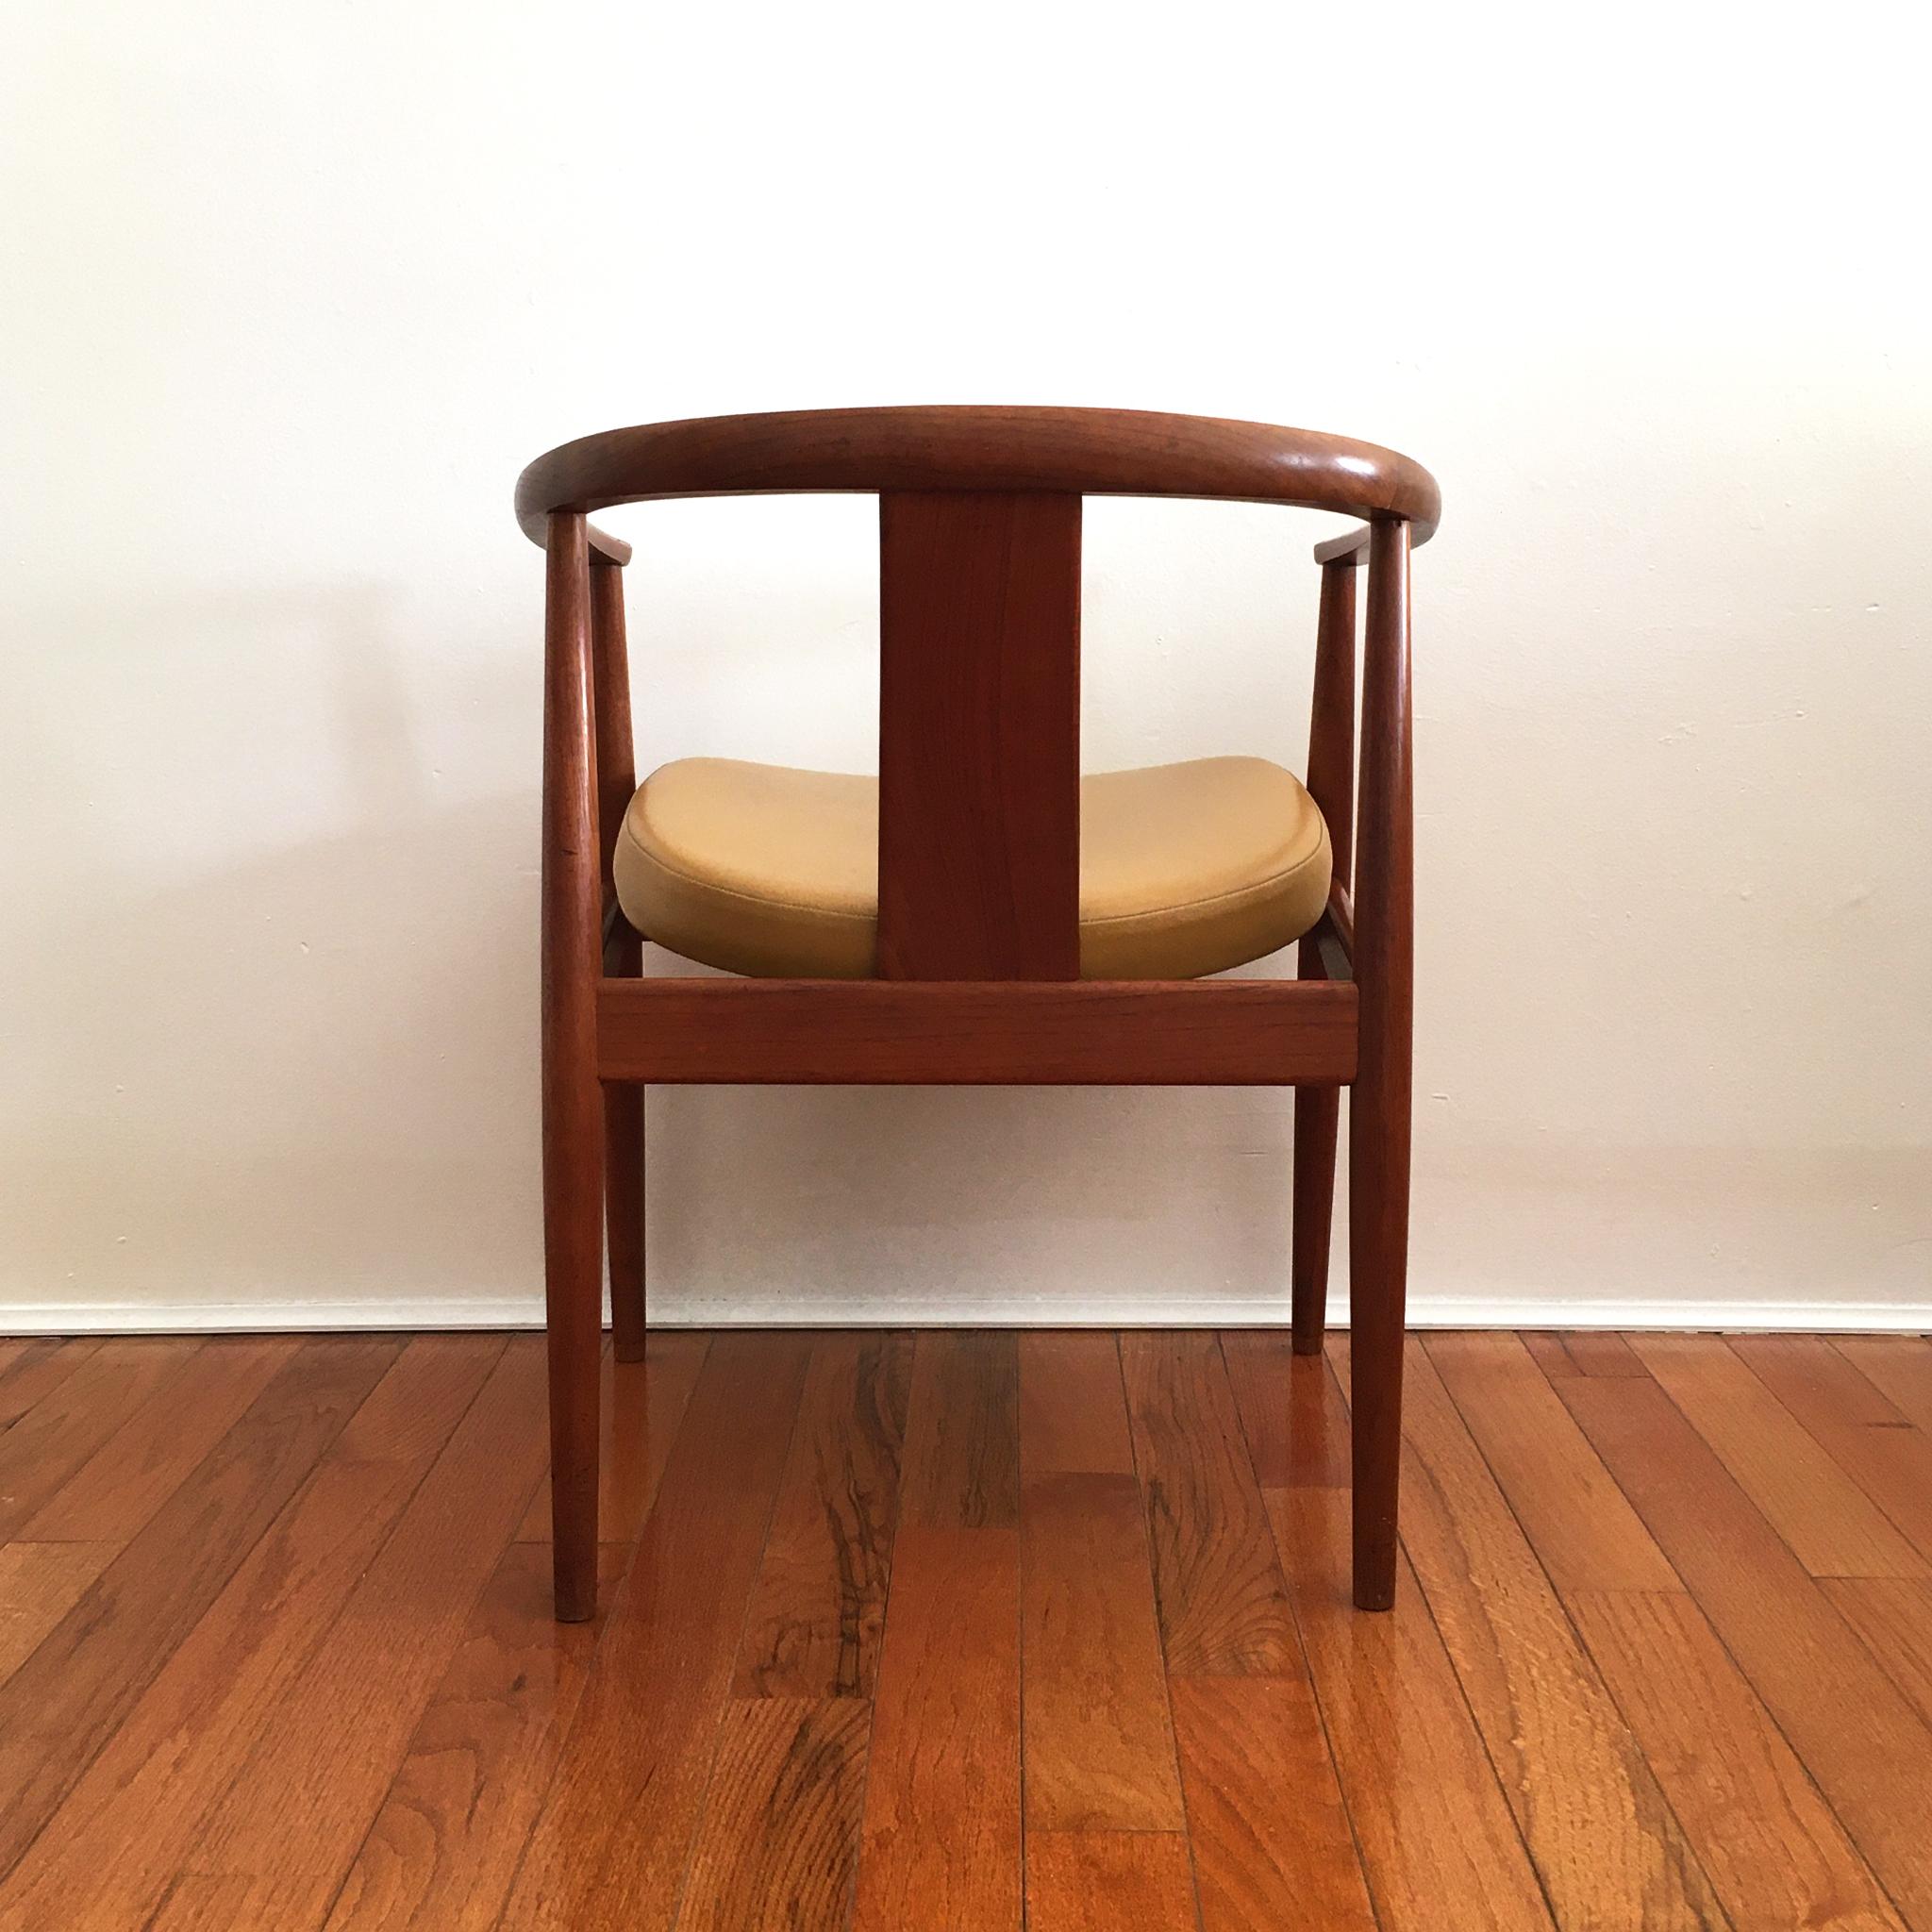 Mid-20th Century Rare Tove & Edvard Kindt-Larsen Danish Teak Chair with Yellow Ochre Leather Seat